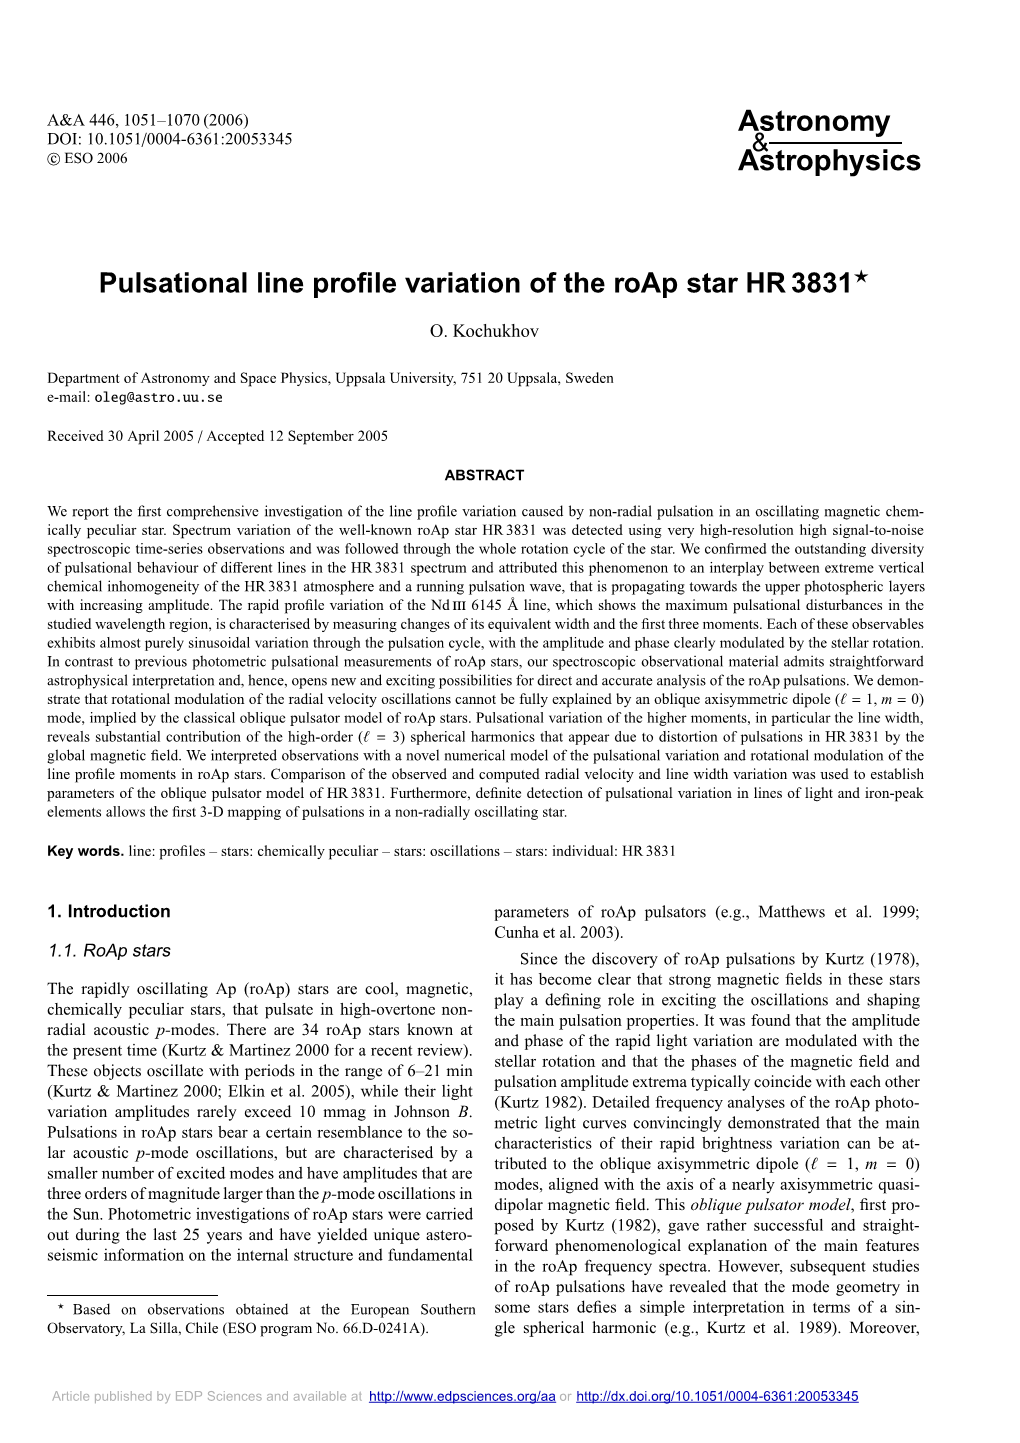 Pulsational Line Profile Variation of the Roap Star HR 3831